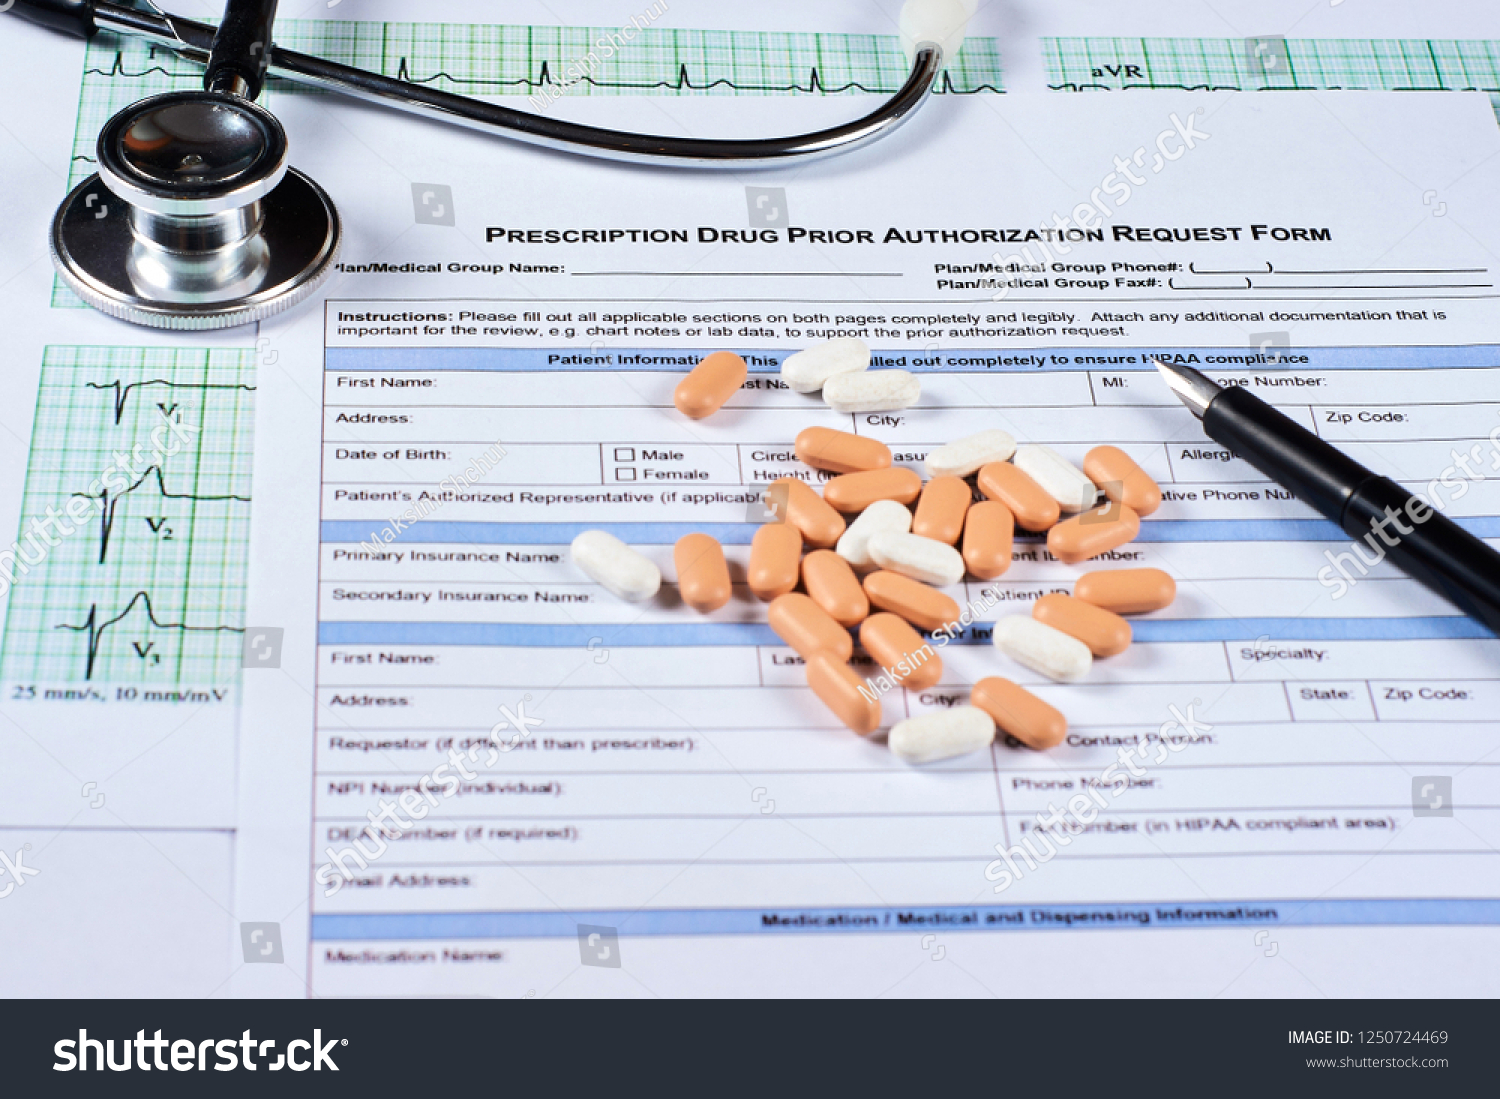 Prescription drugs prior authorization request form, pills, stethoscope and pen on a EKG graph paper background. Close-up. #1250724469